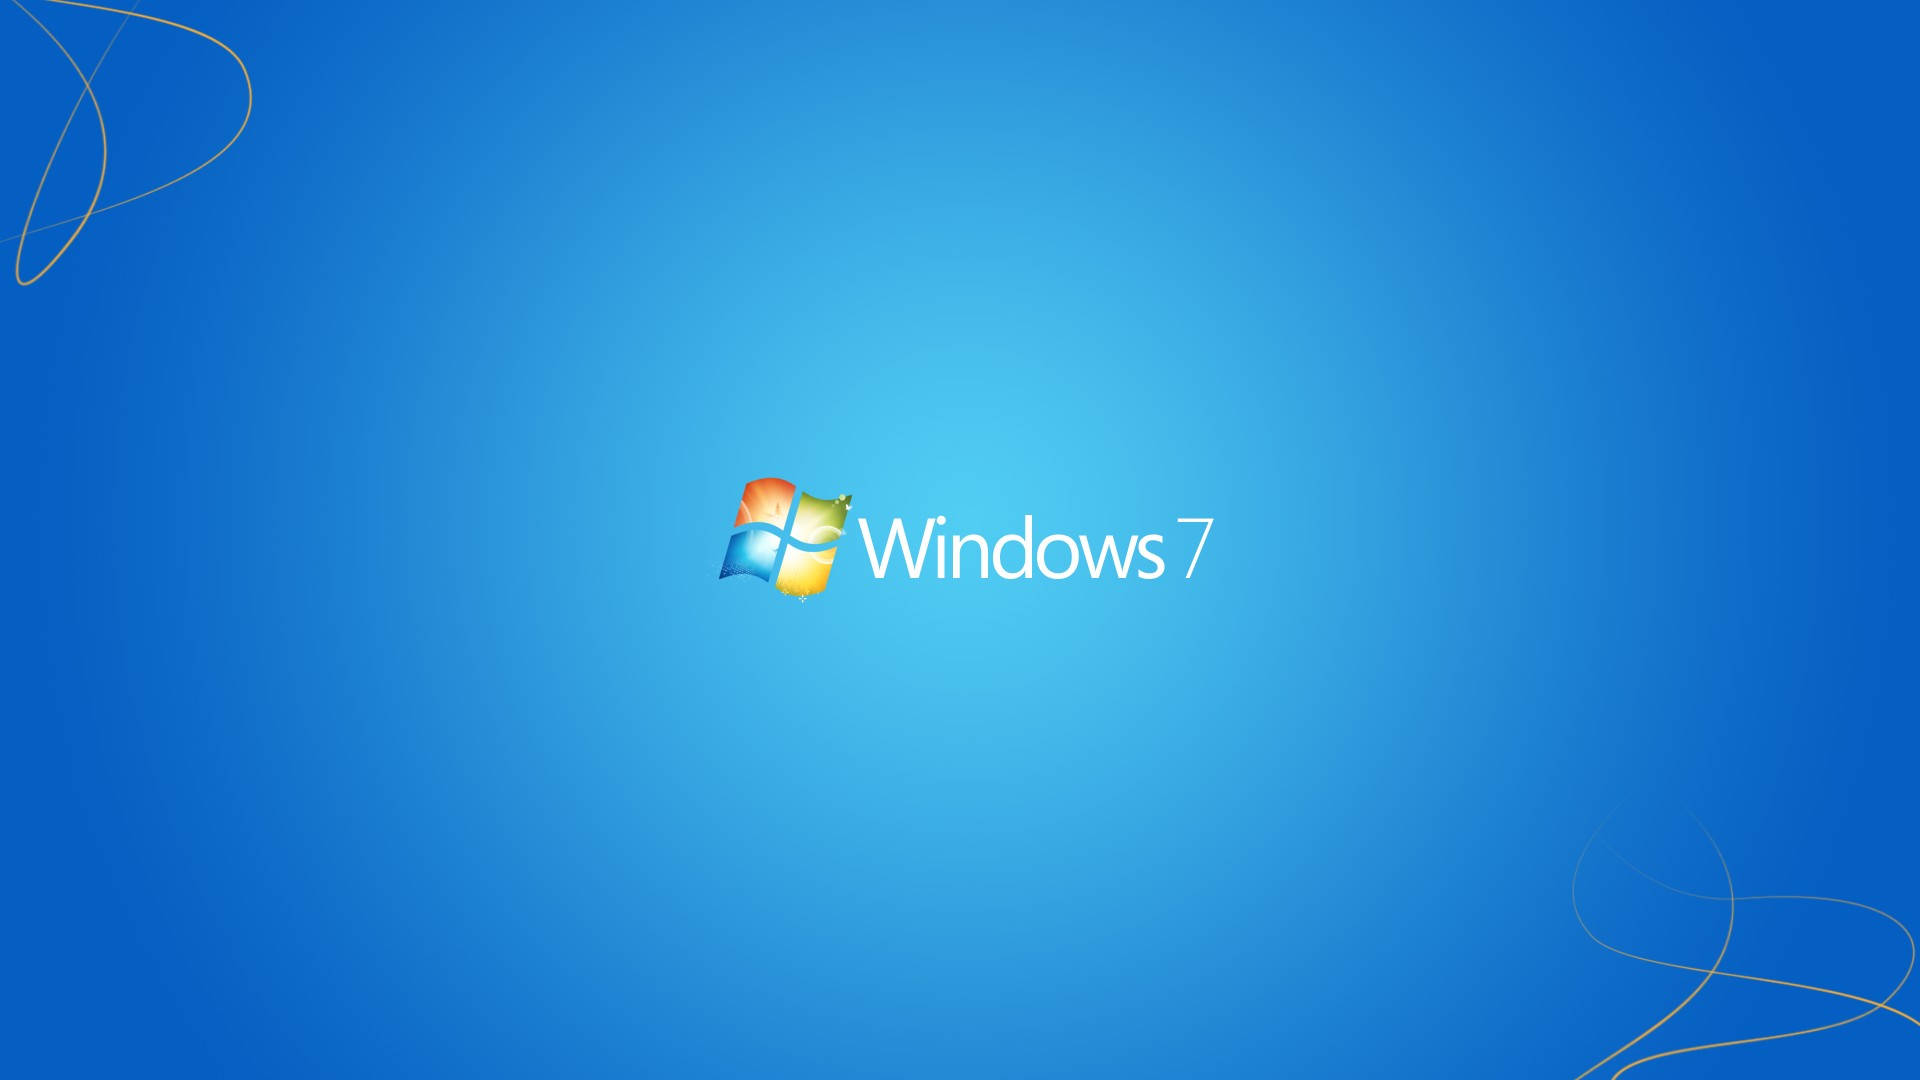 Simple Blue Windows 7 Screen Background